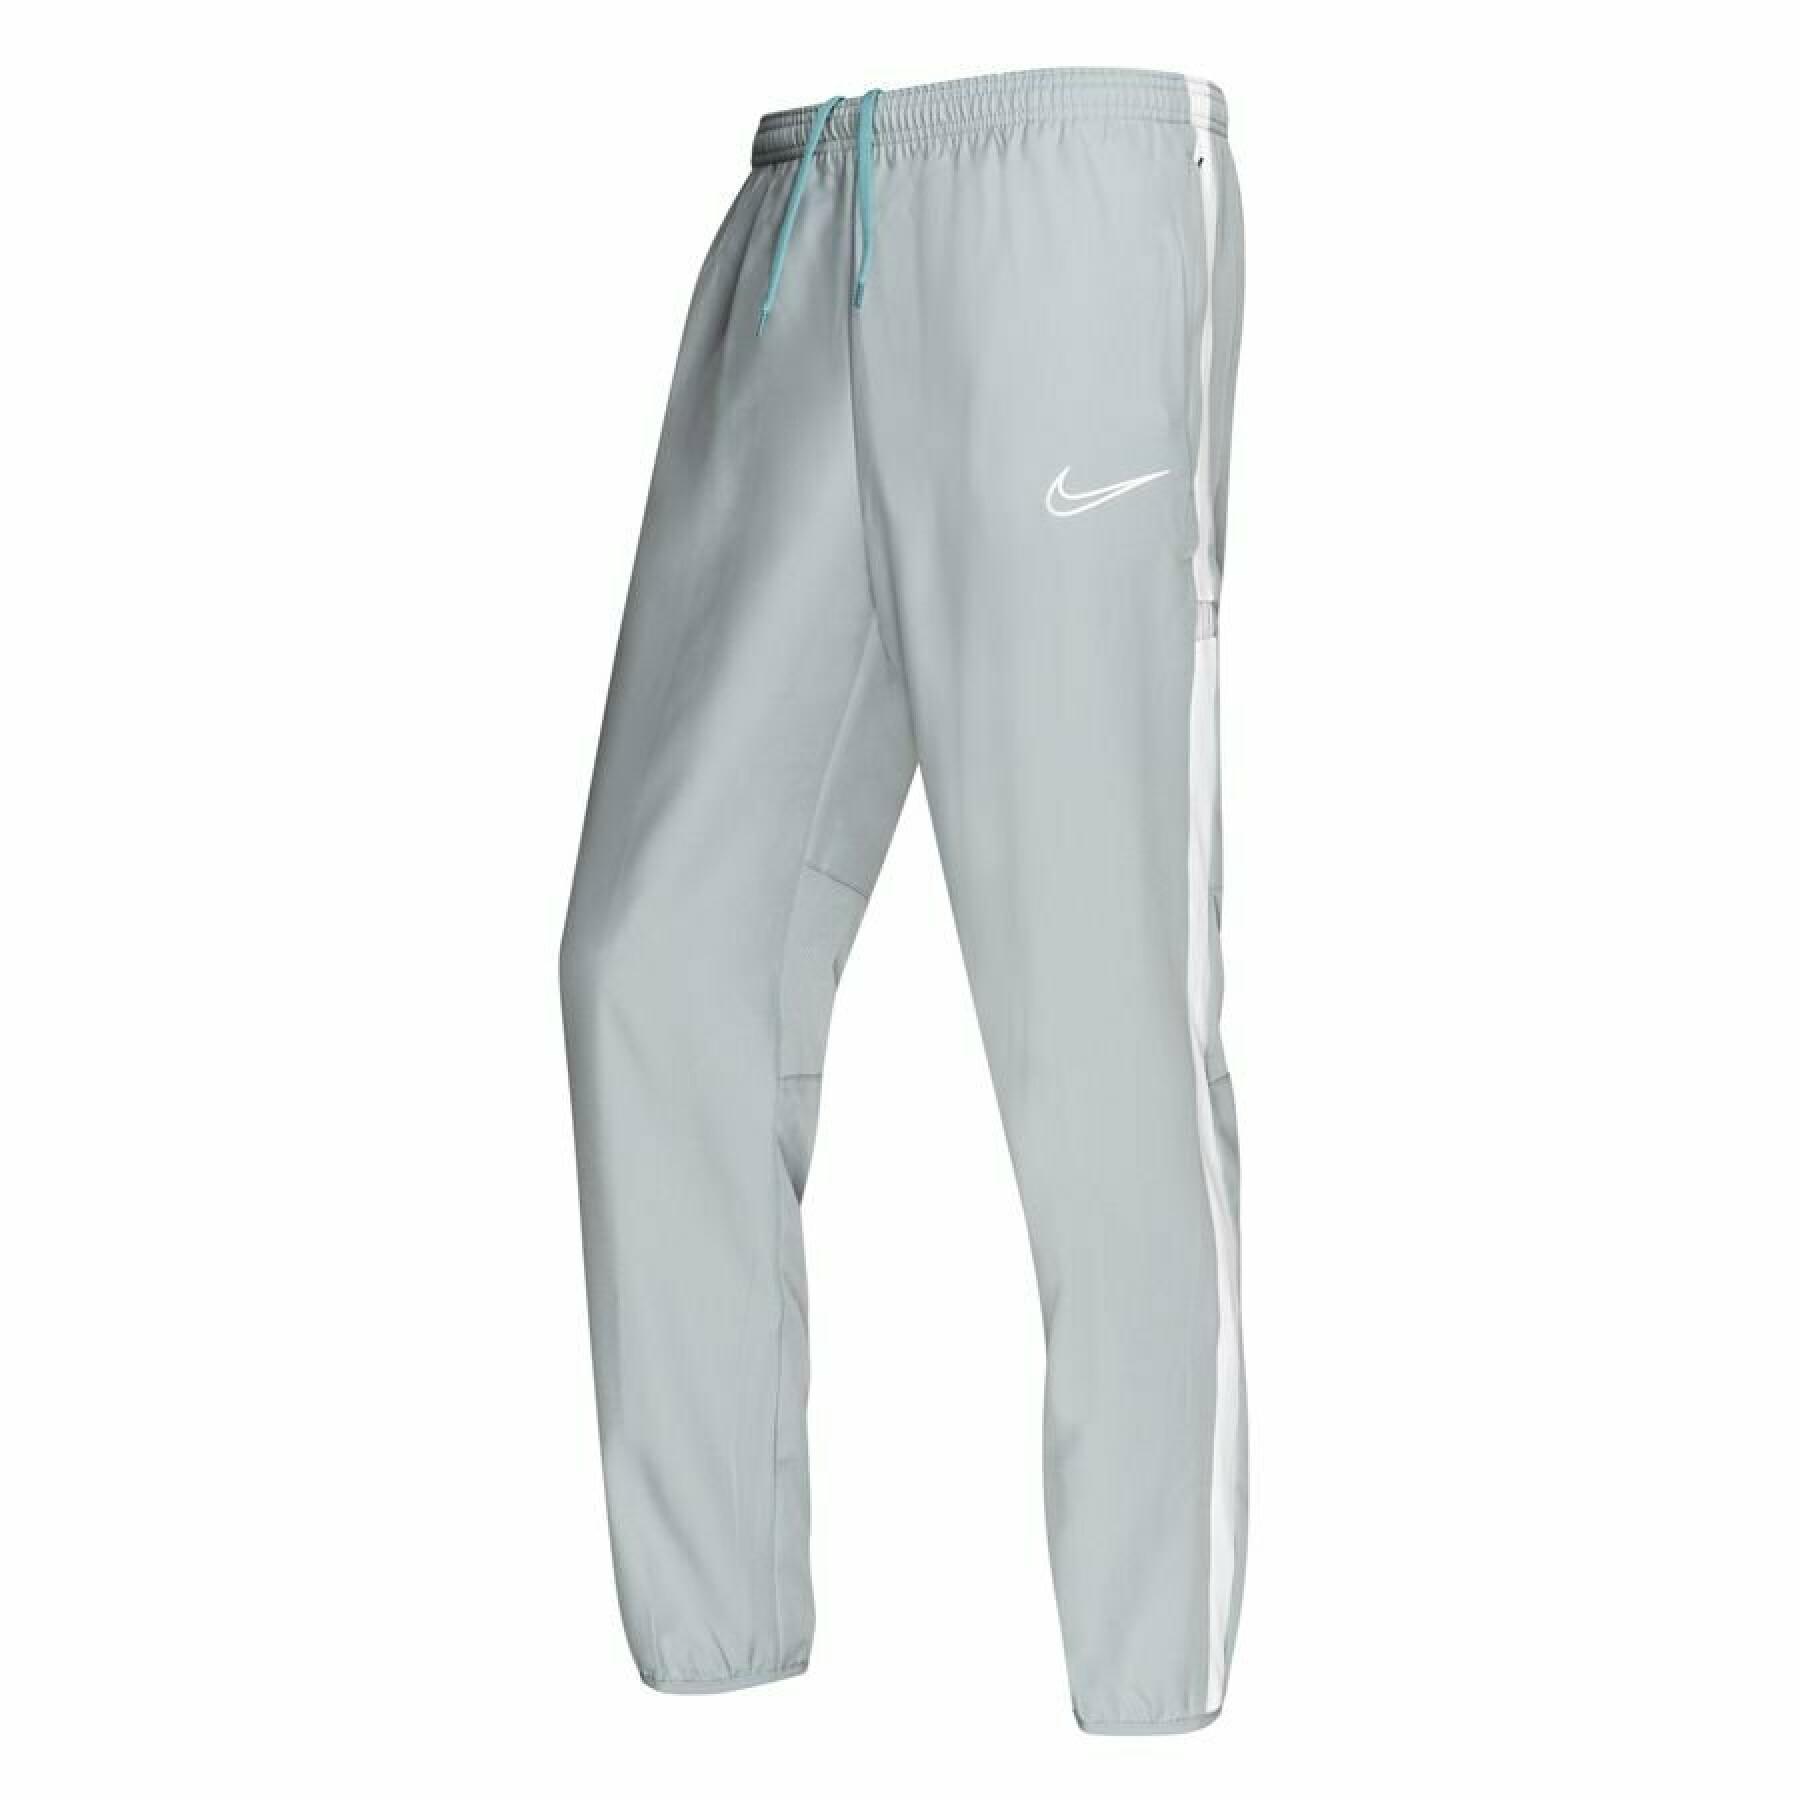 Pantalon Nike Dry ACD